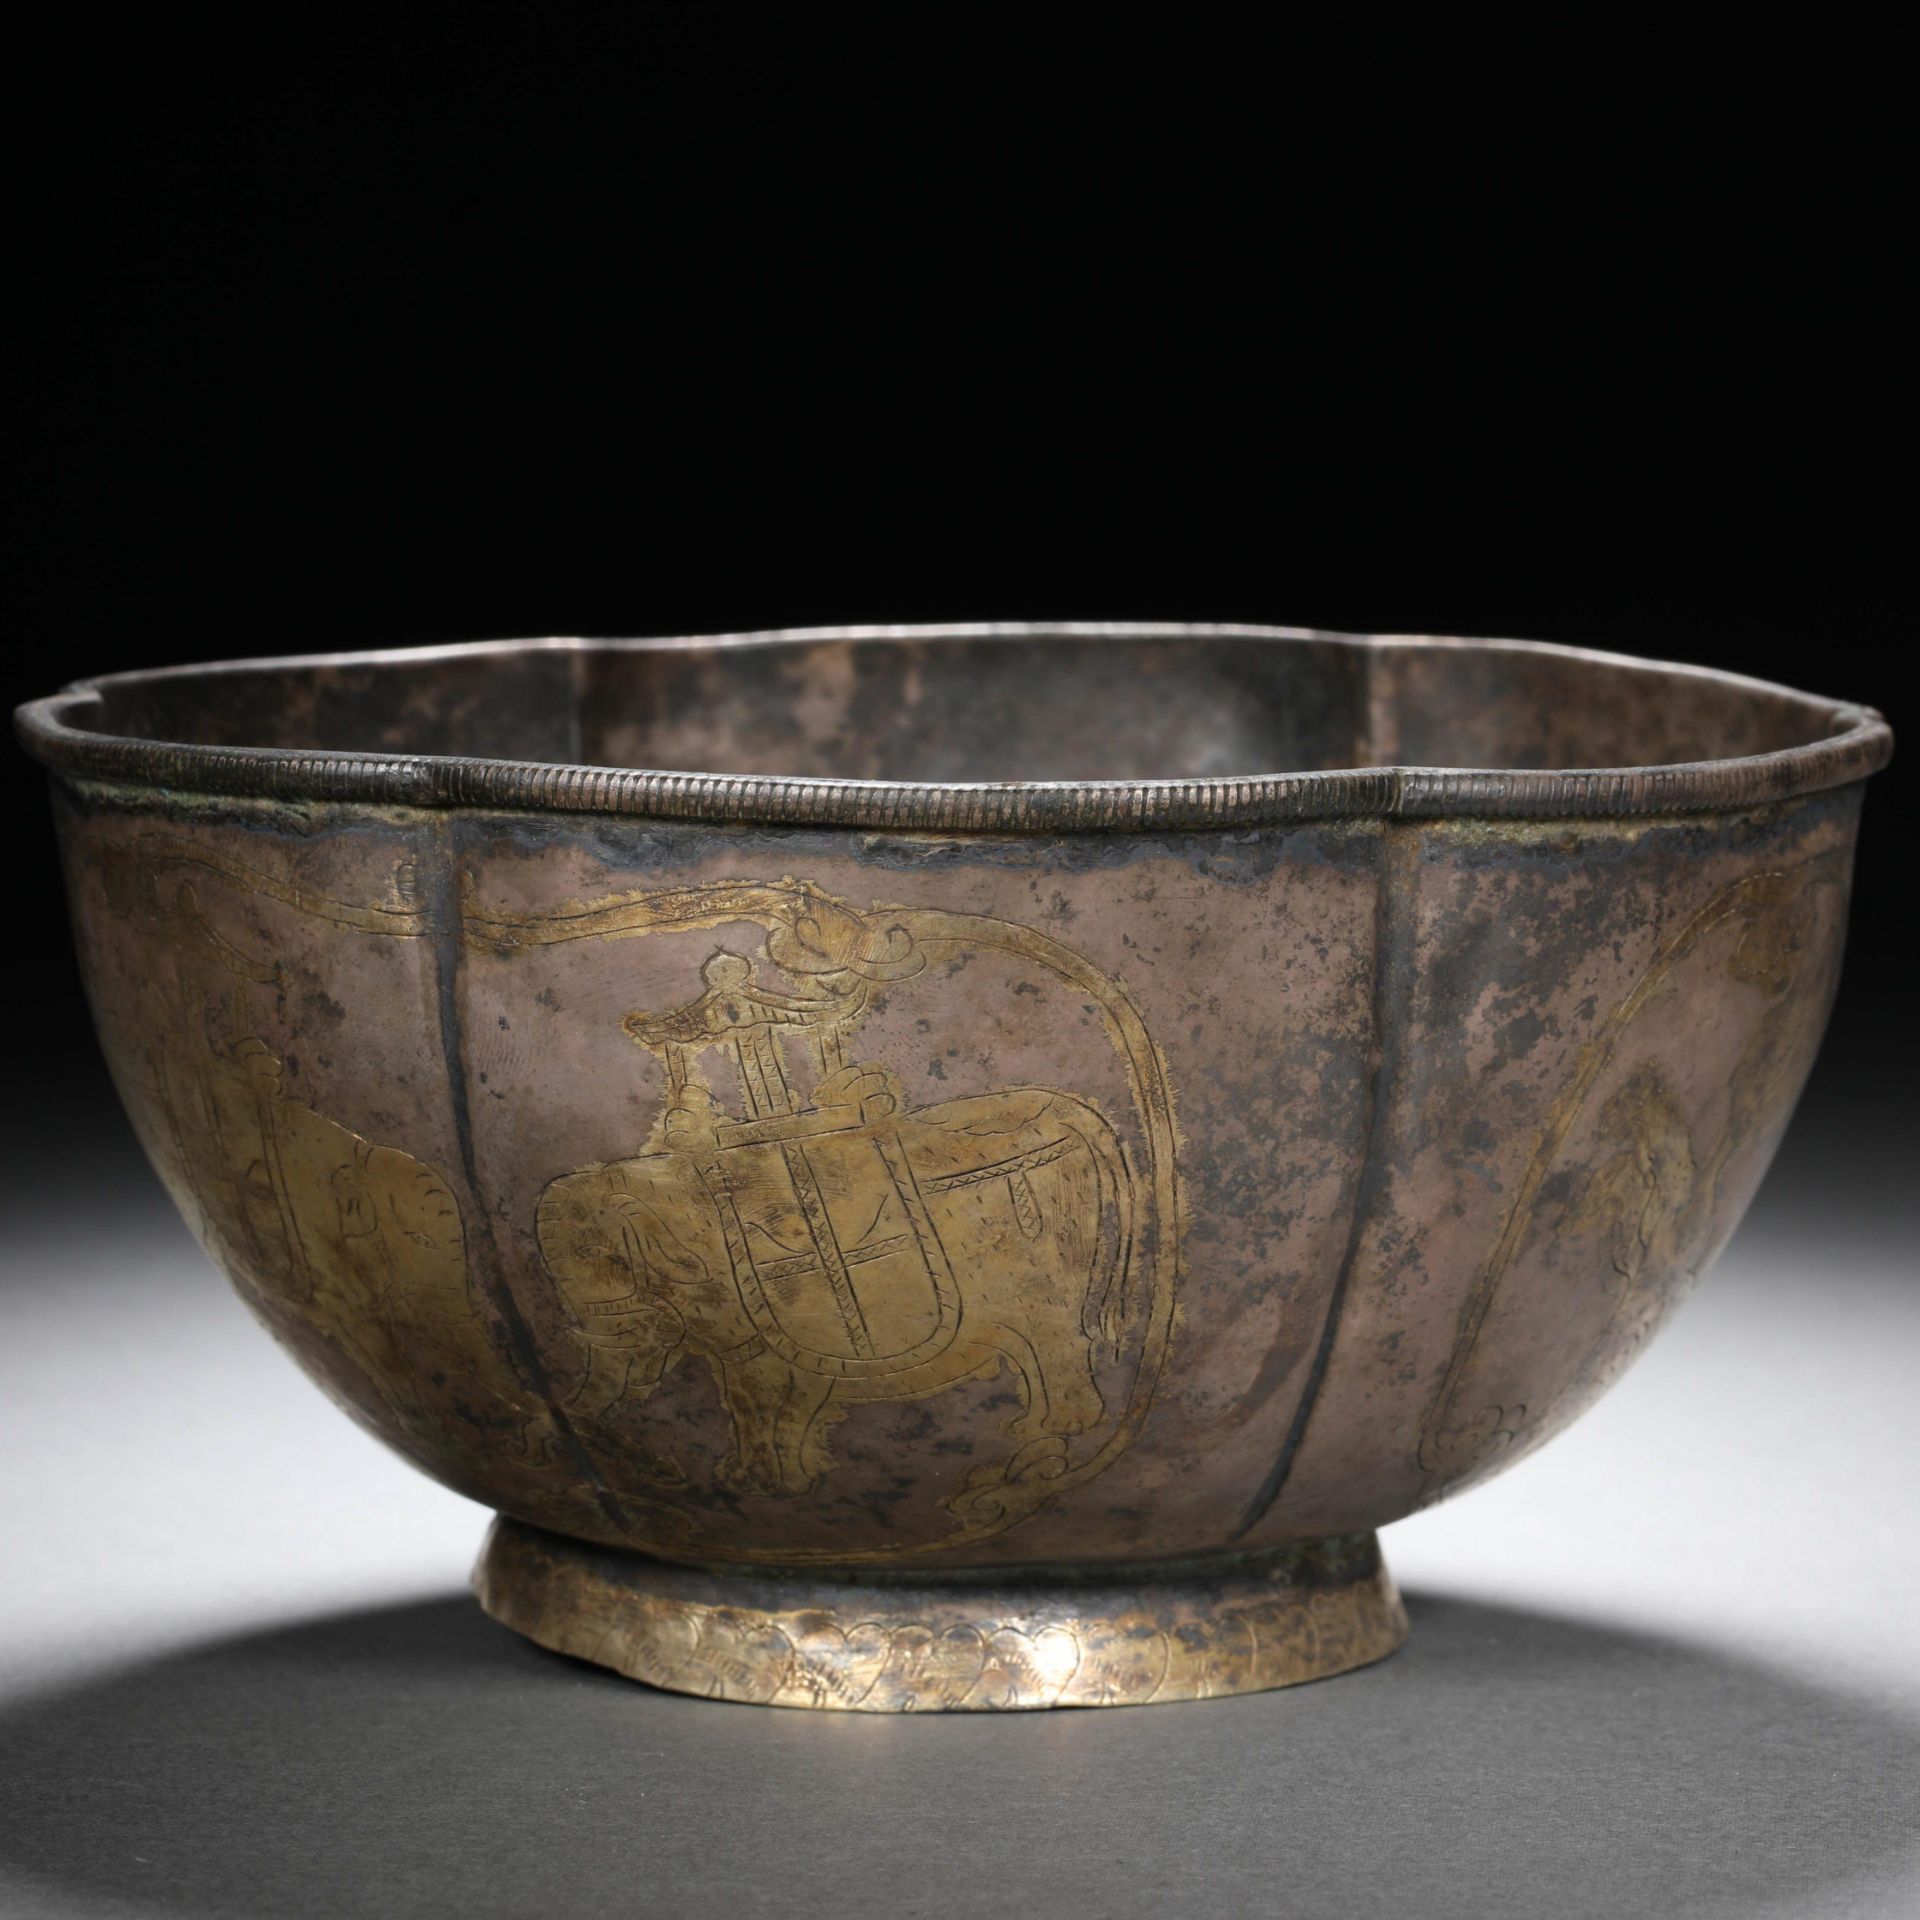 Gold-encrusted silver lotus bowl